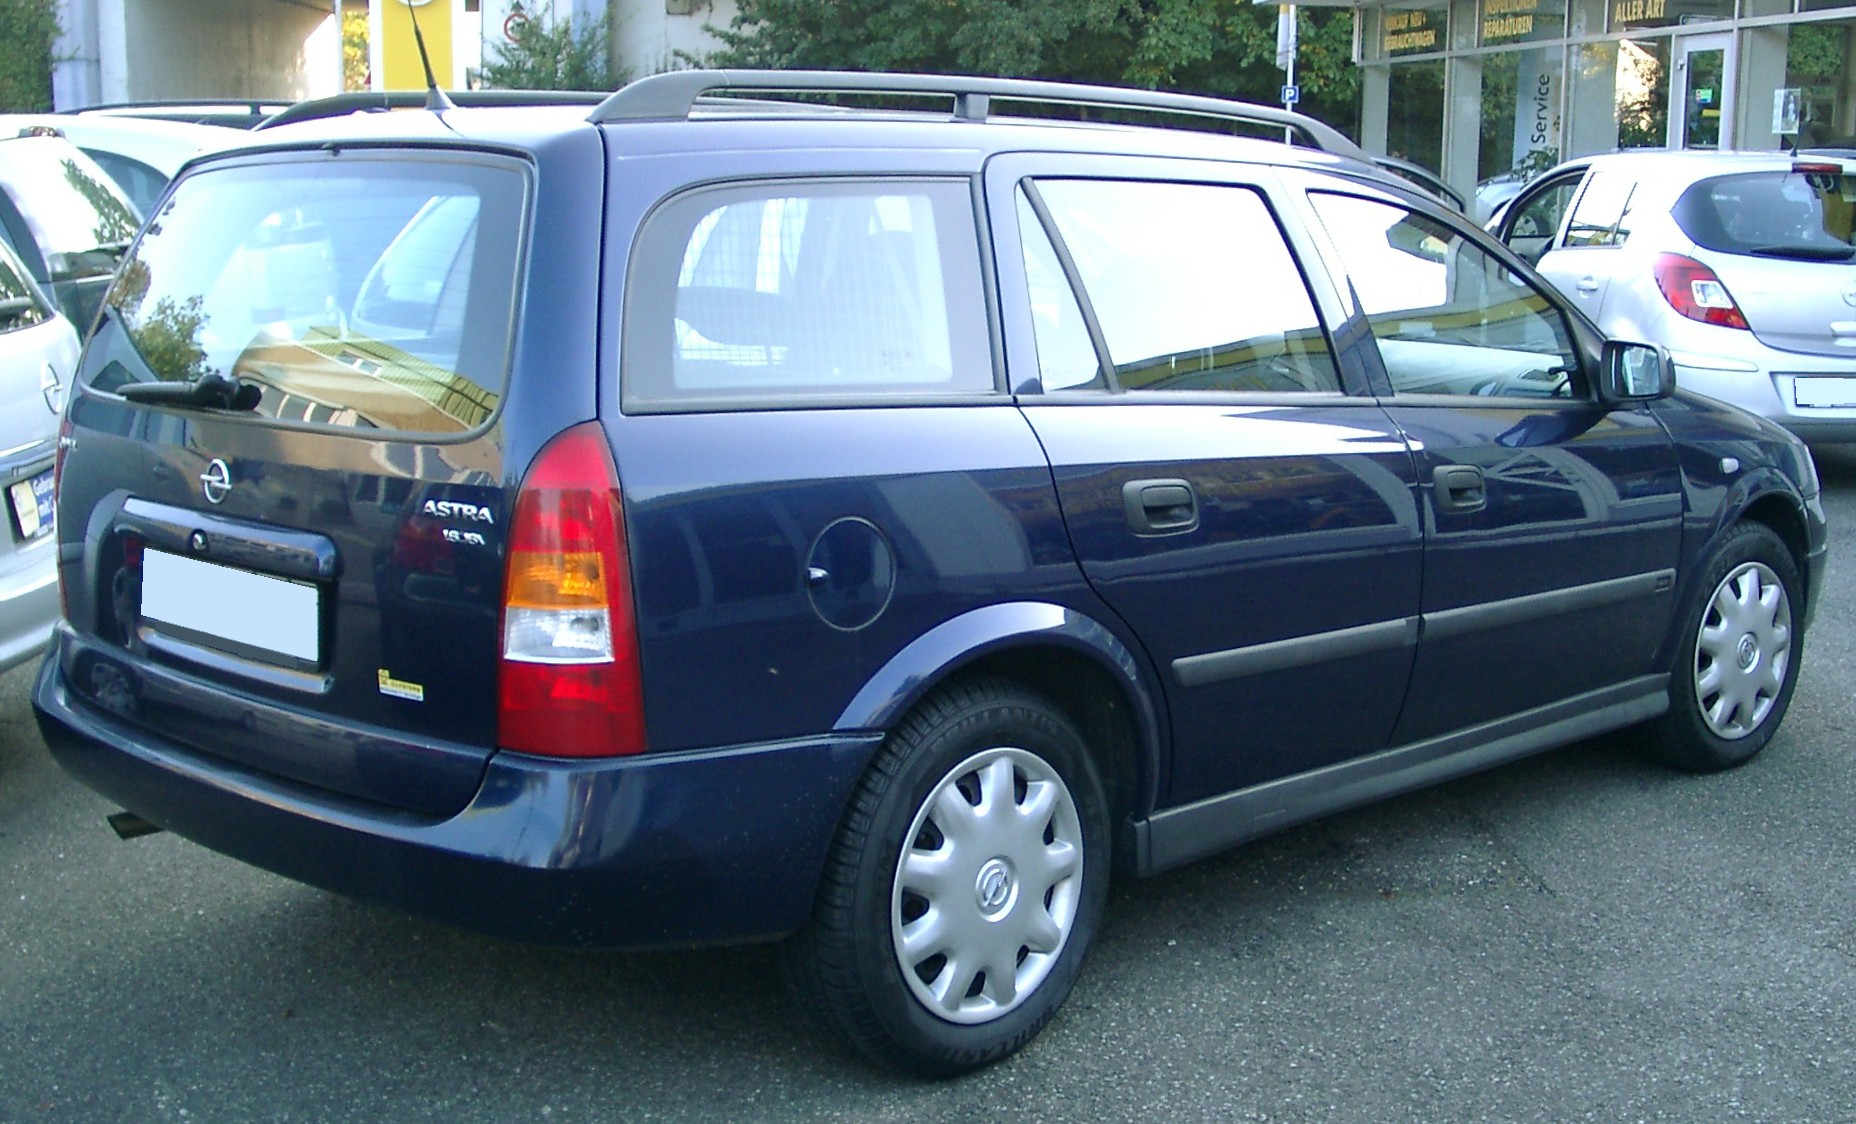 Opel_Astra_Caravan_rear_20071007